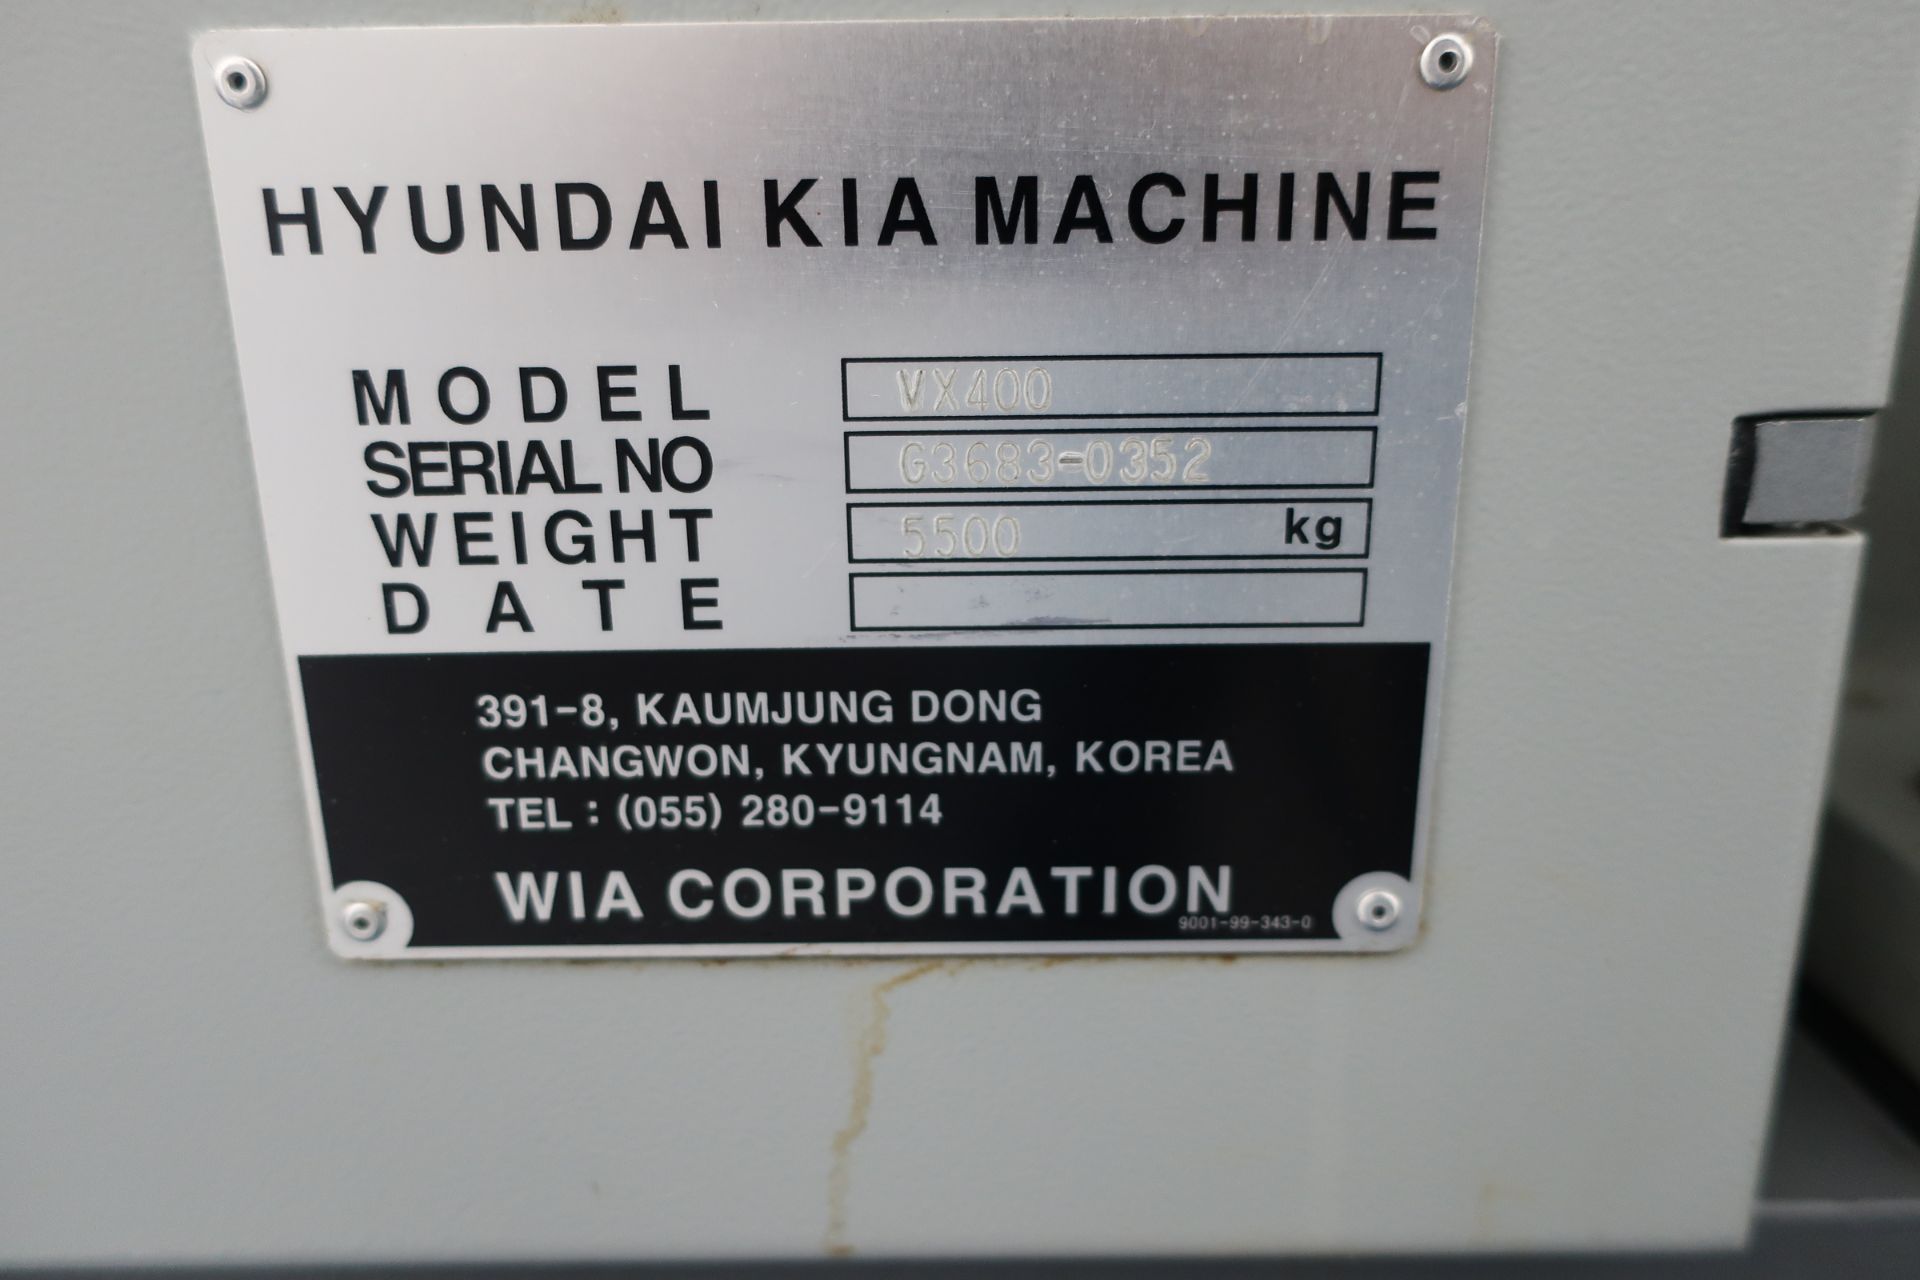 2007 Hyundai Kia VX-400 CNC Vertical Machining Center SN G3683-0352 - Image 11 of 14